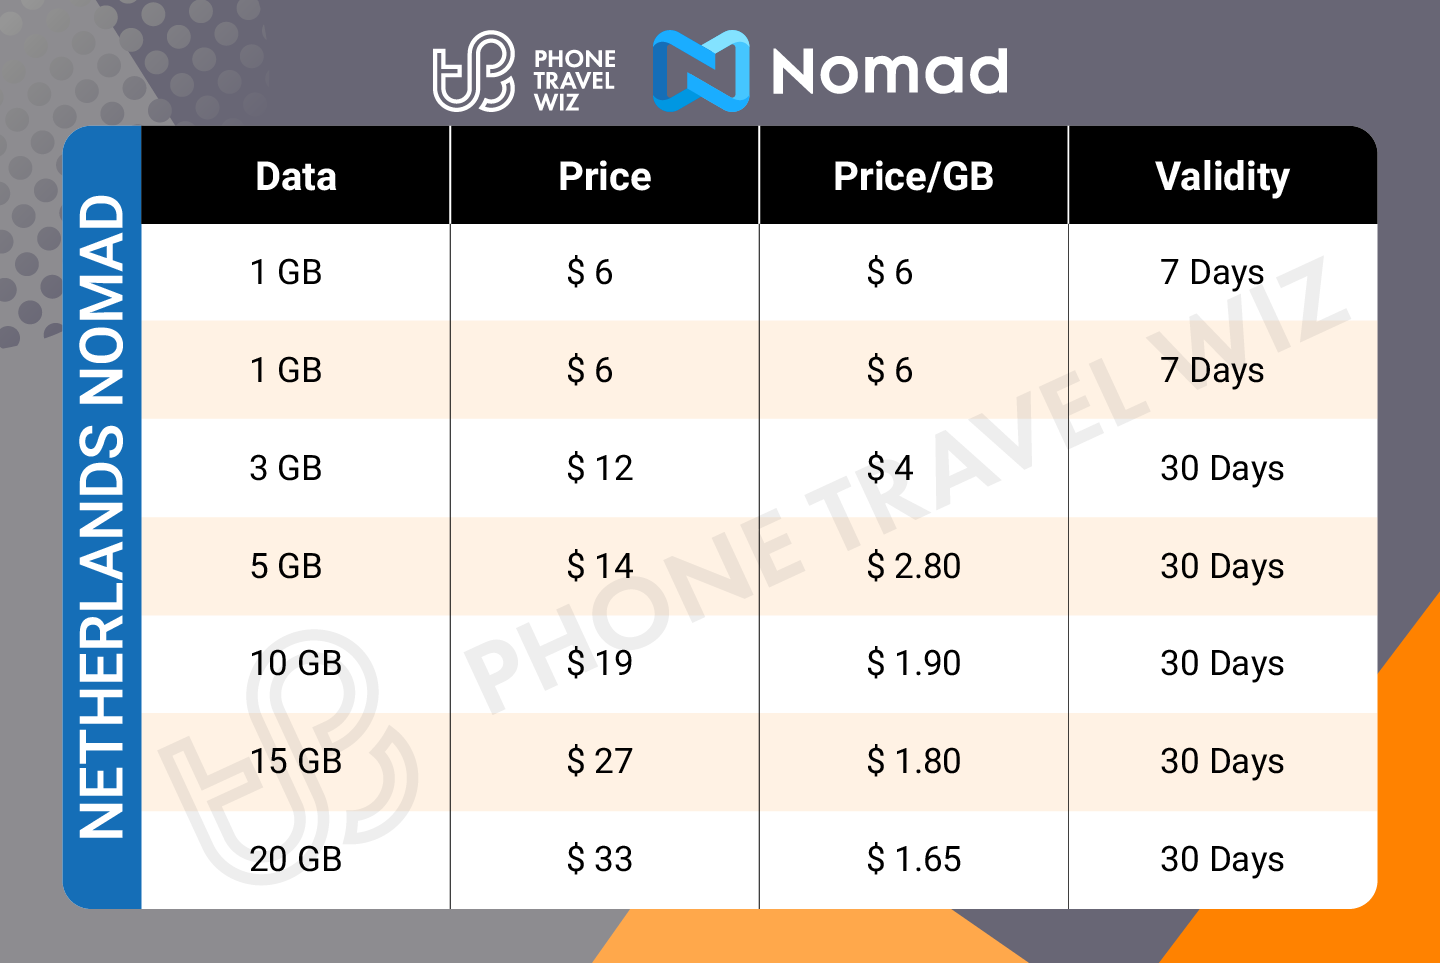 Nomad Netherlands eSIM Price & Data Details Infographic by Phone Travel Wiz